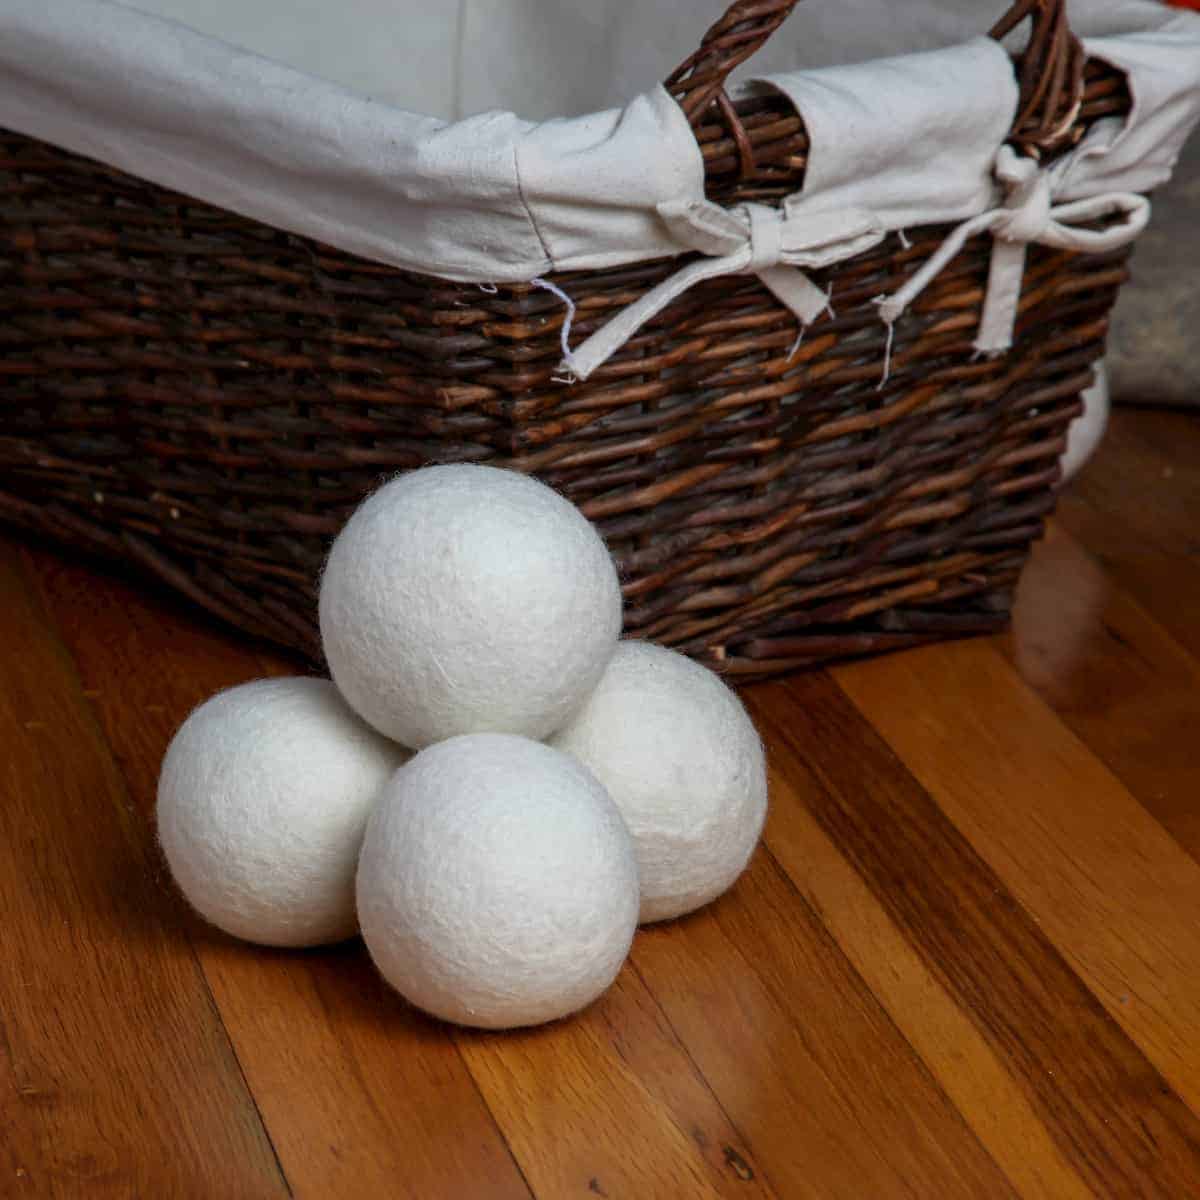 Tru Earth Reusable Wool Dryer Balls